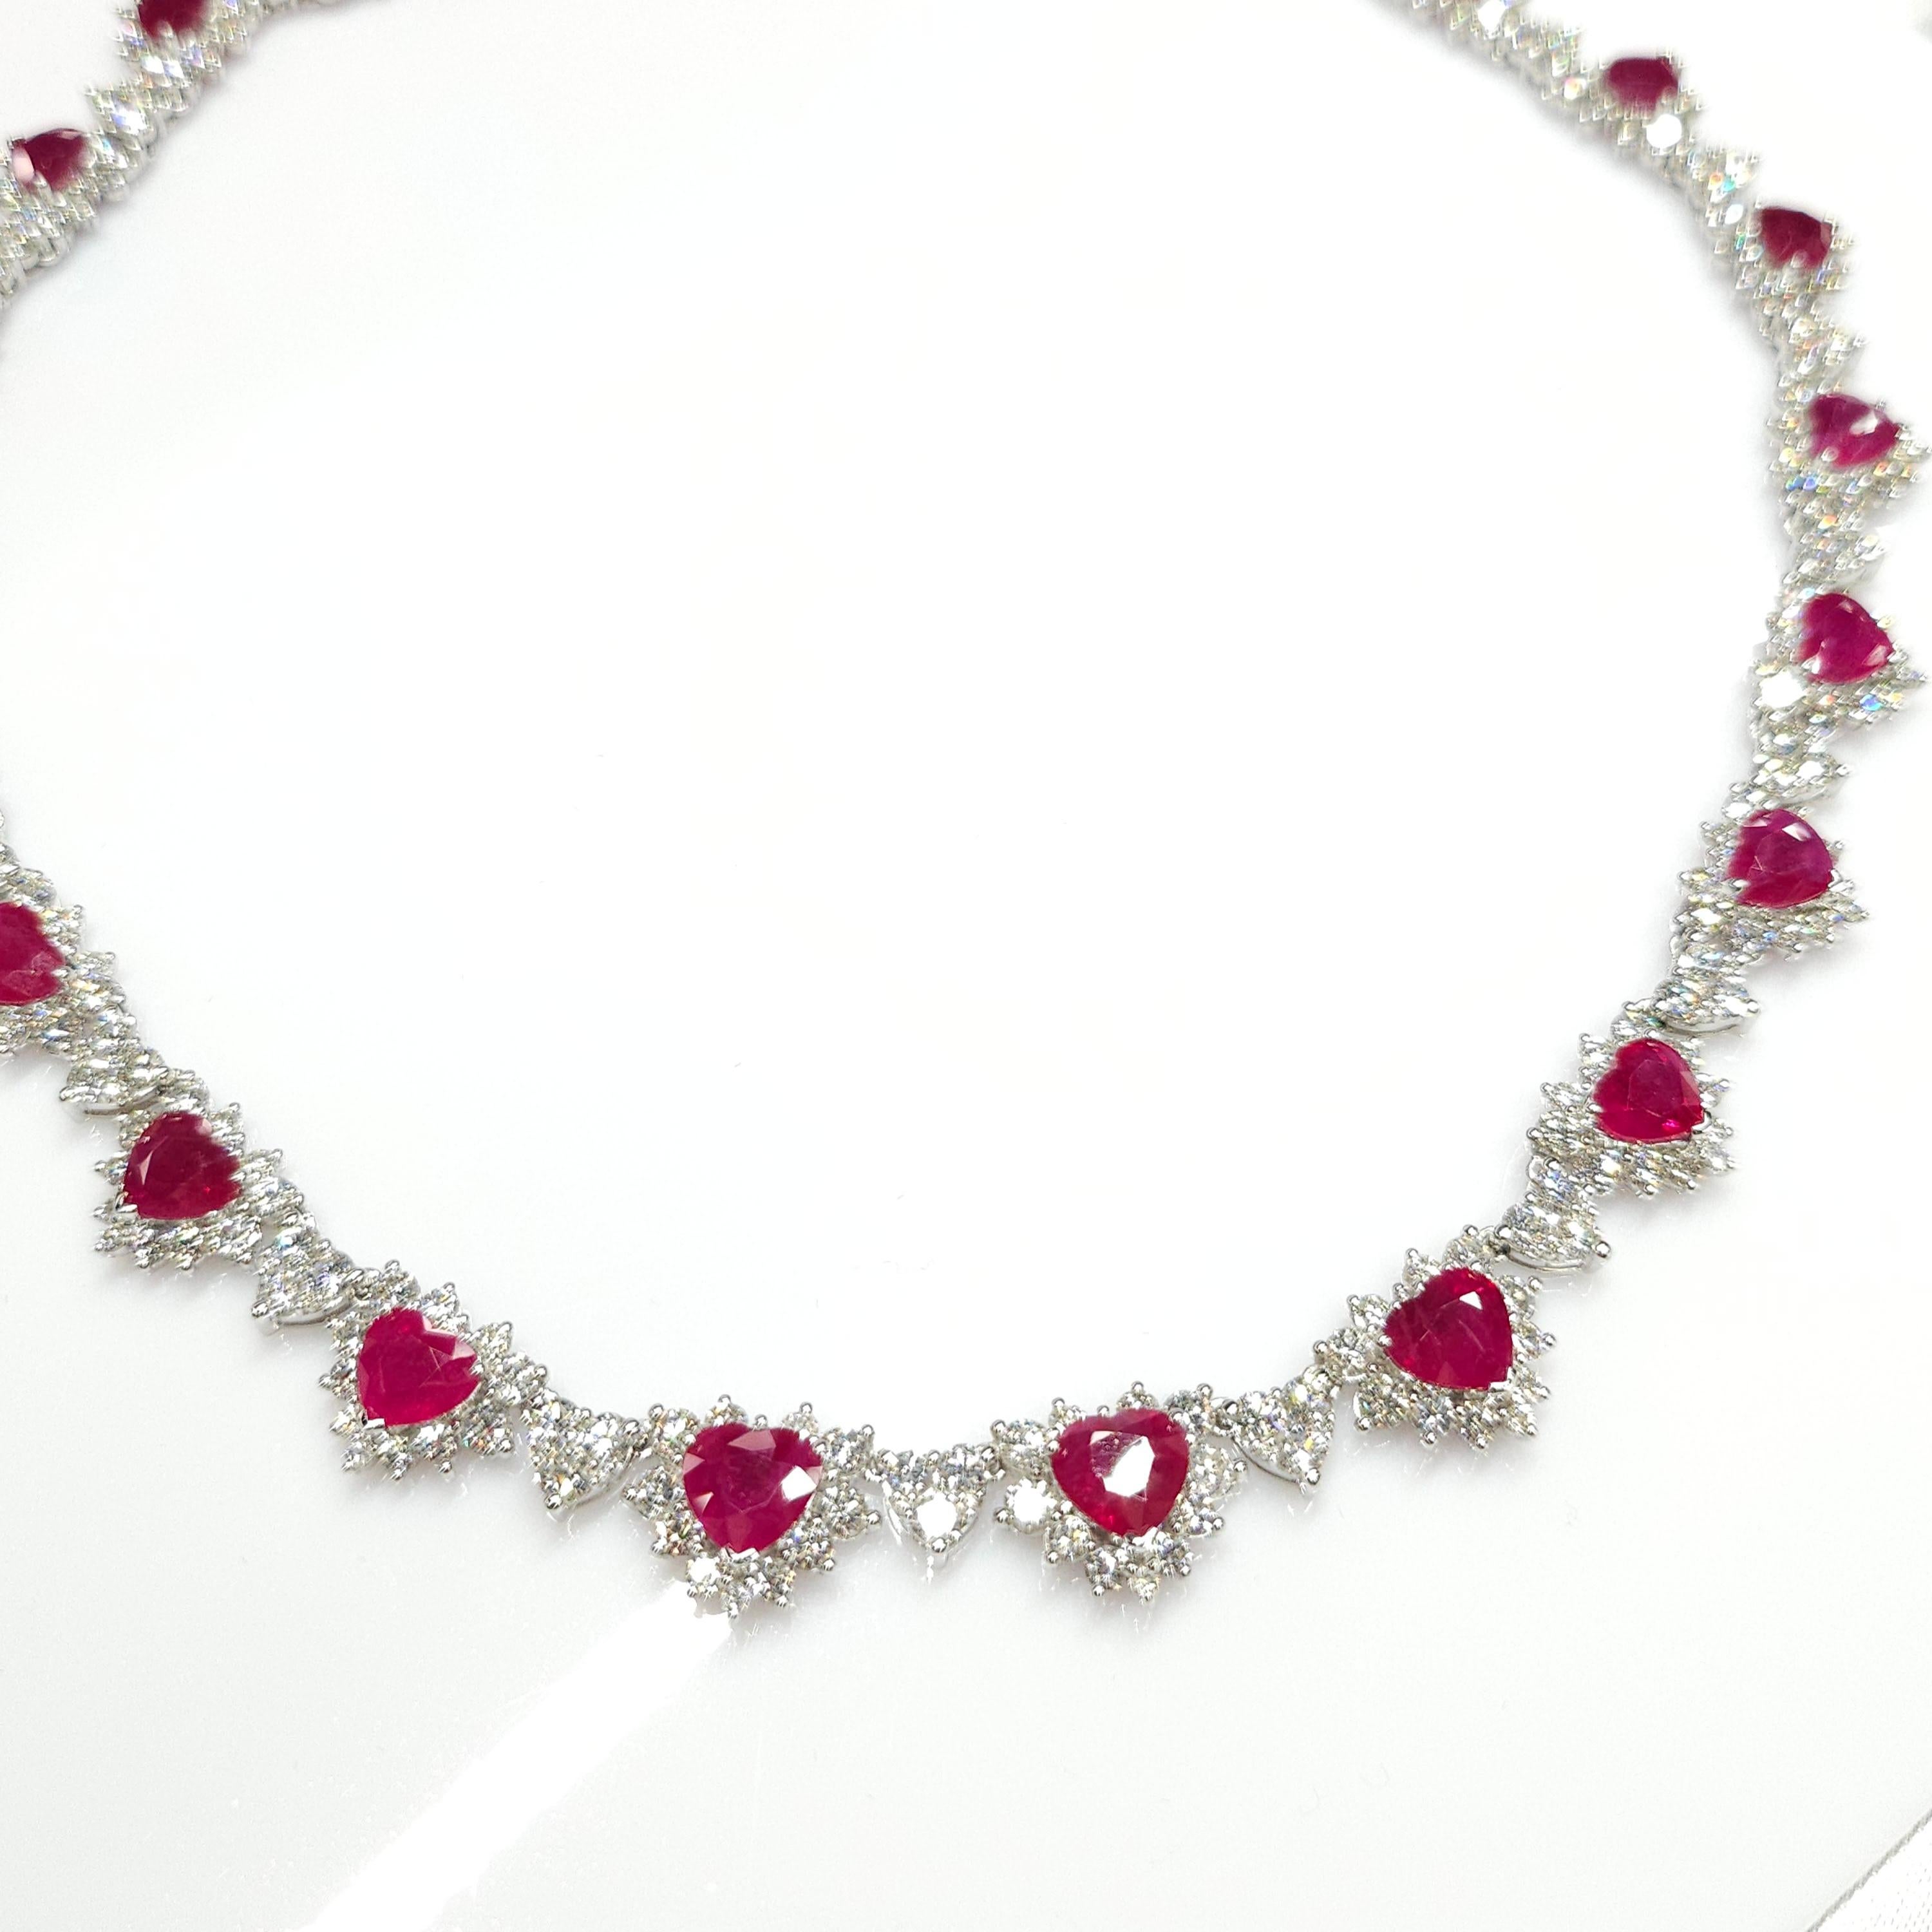 IGI Certified 26.58 Carat Burma Ruby & 18.85 Carat Diamond Necklace in 18K Gold For Sale 1